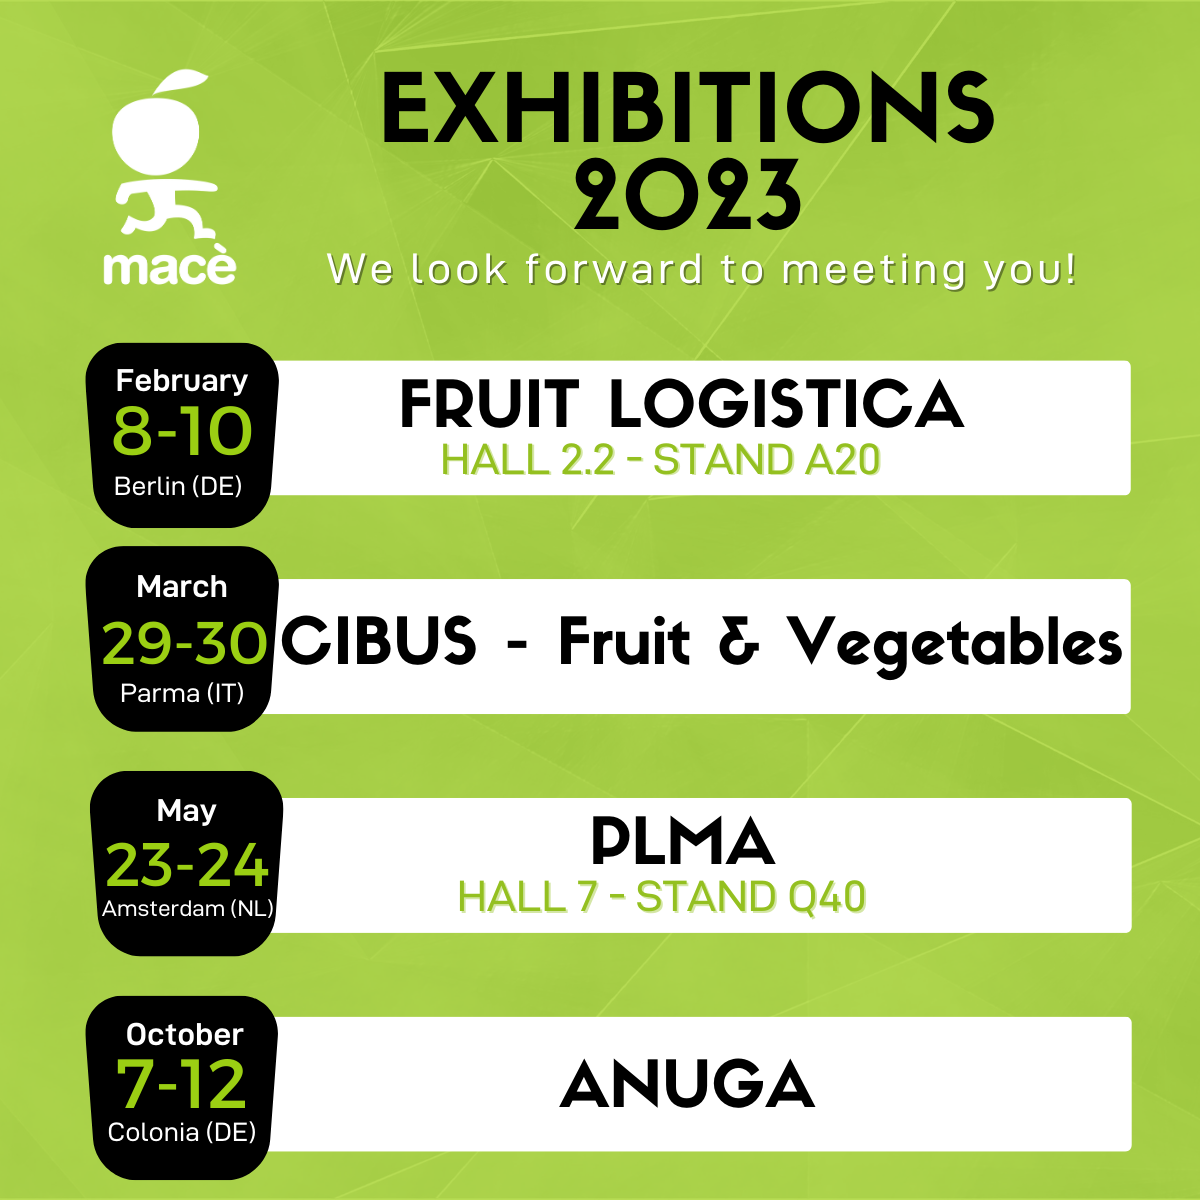 2023 trade fair calendar in which Mac participates: fruit logistics 8-10 February, Cibus 29-30 March, PLMA 23-24 May, ANUGA 7-12 October